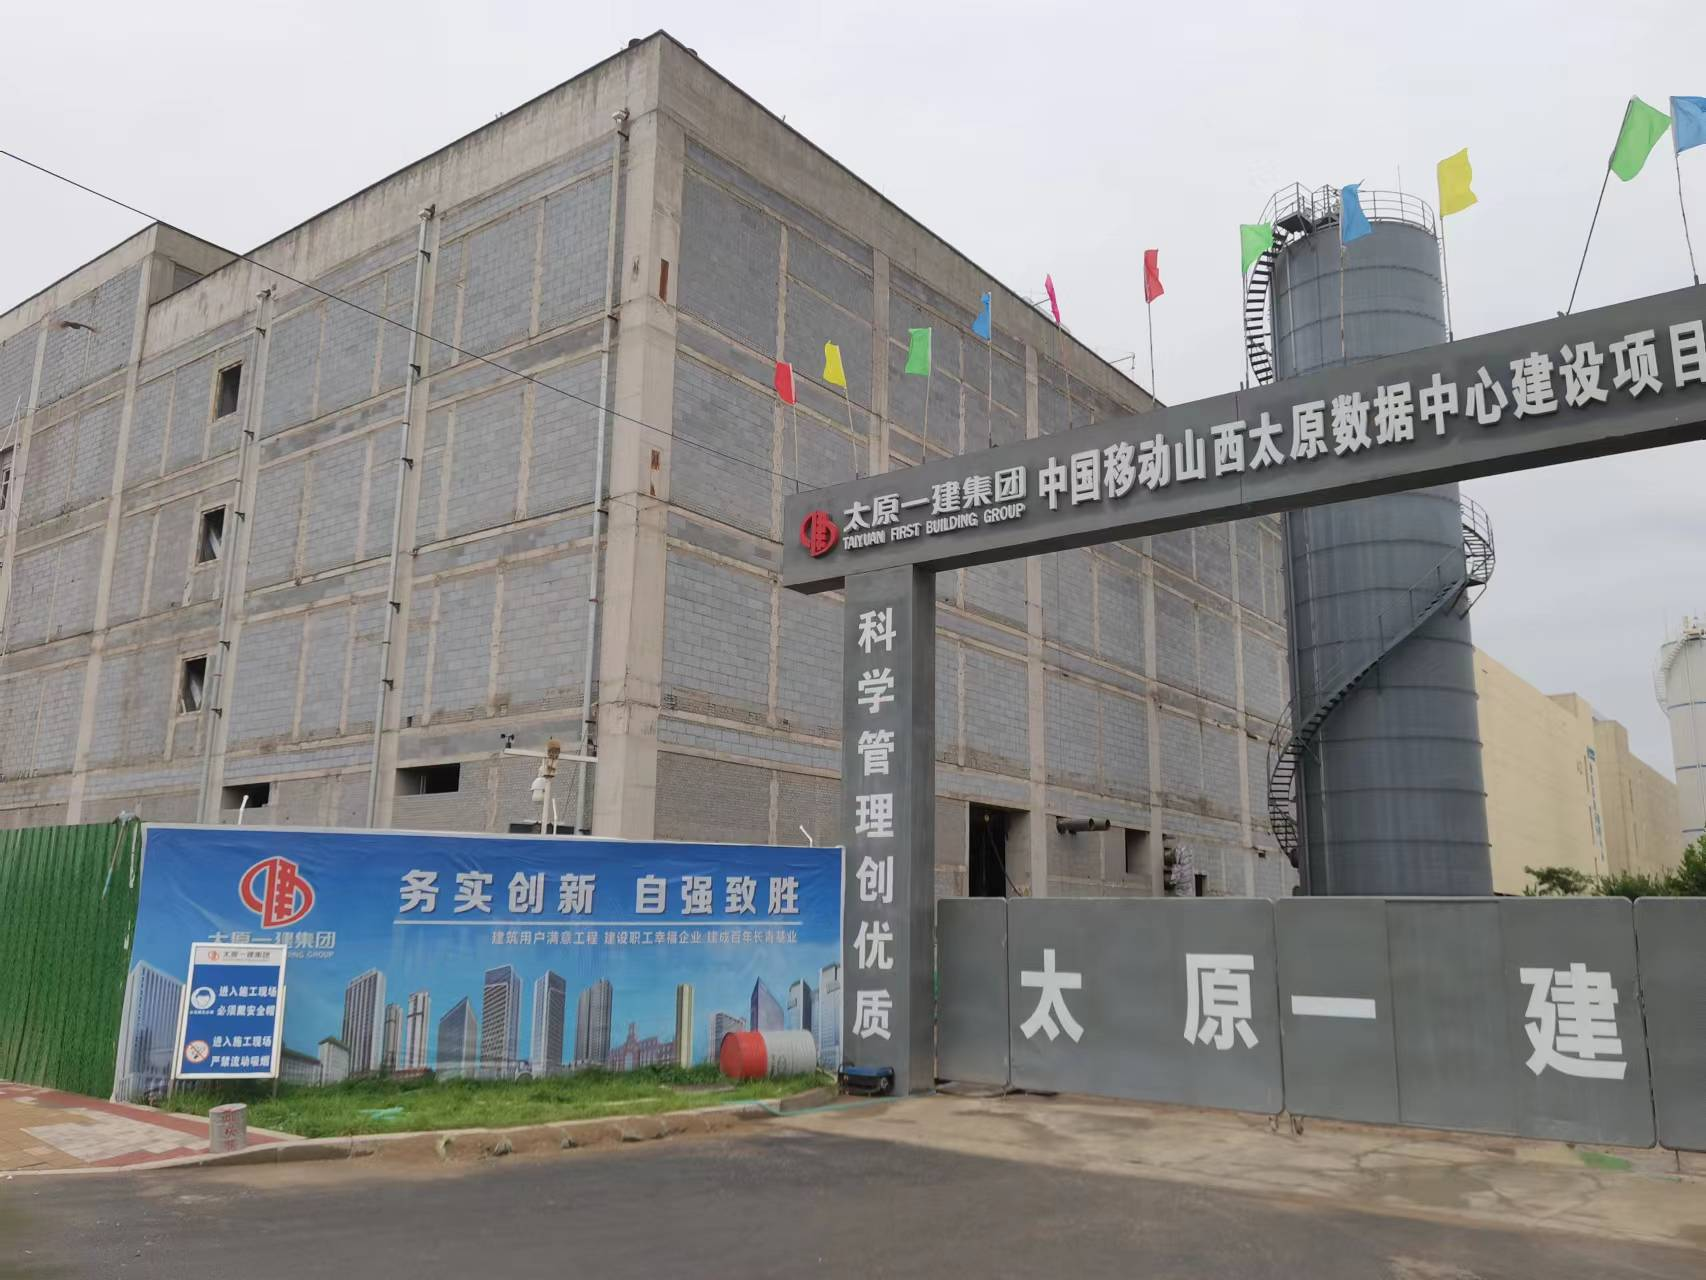 Prughjettu Taiyuan Mobile Data Center